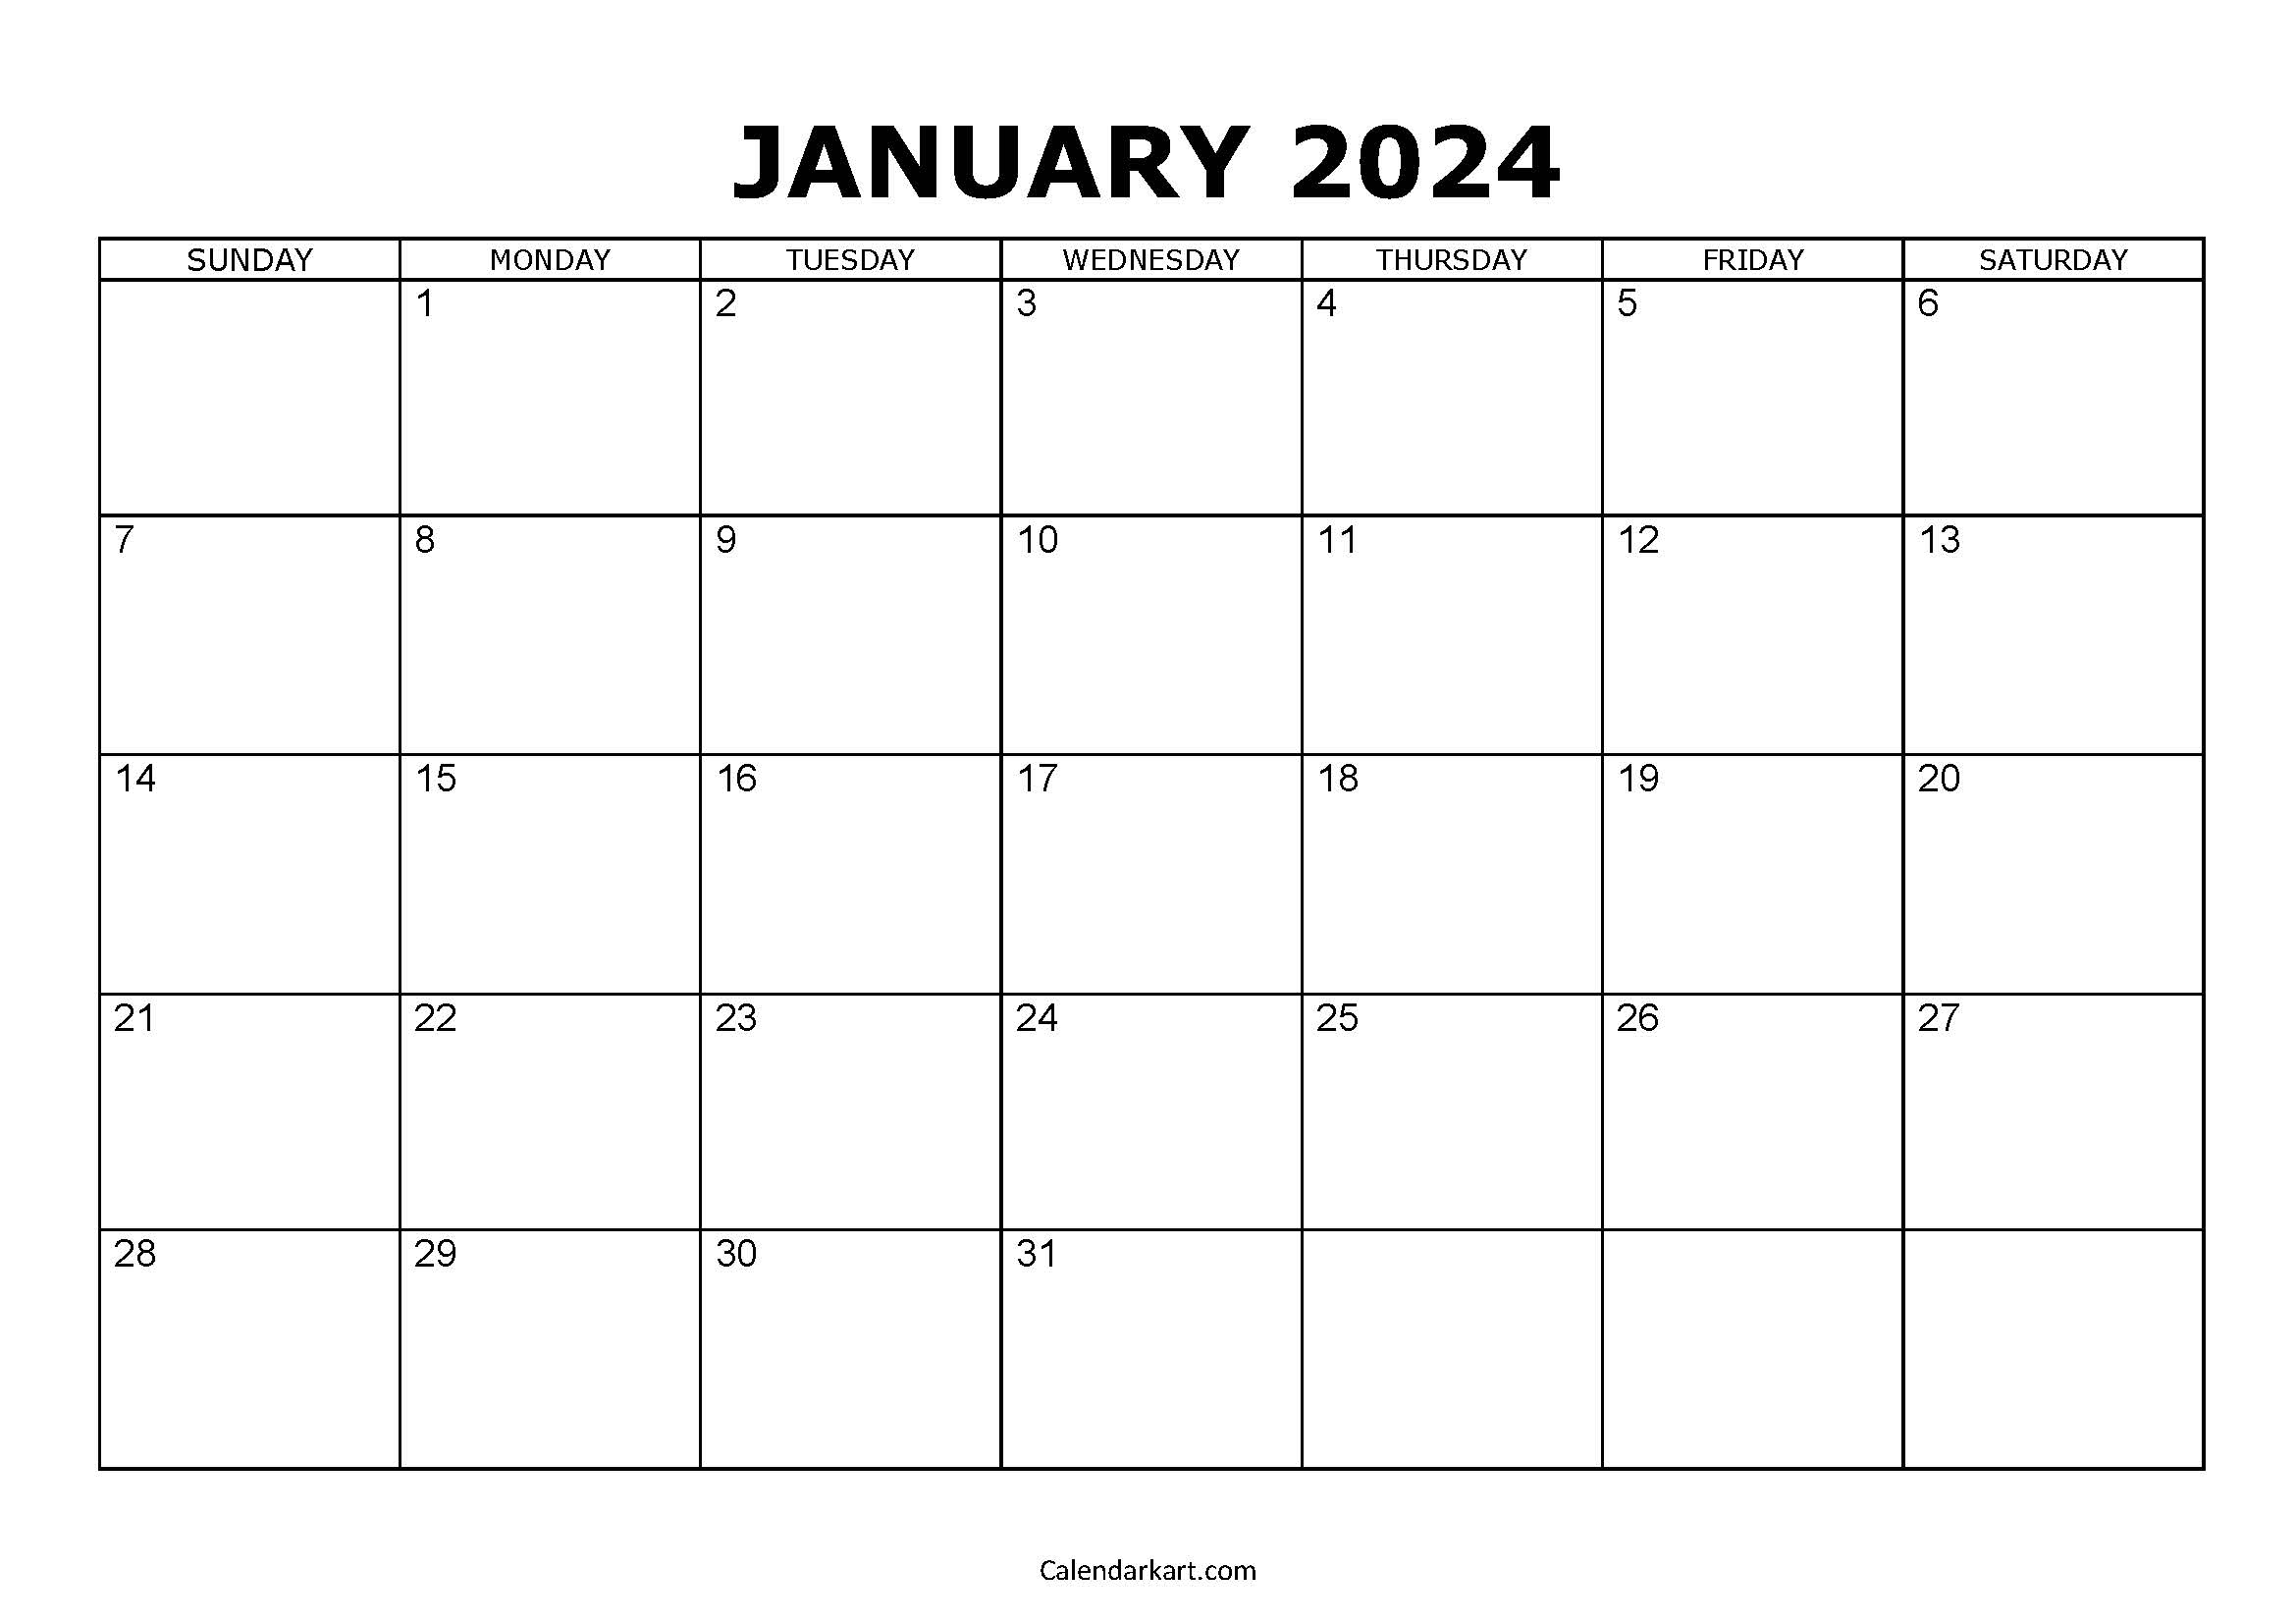 Free Printable January 2024 Calendars - Calendarkart | January 2024 Calendar